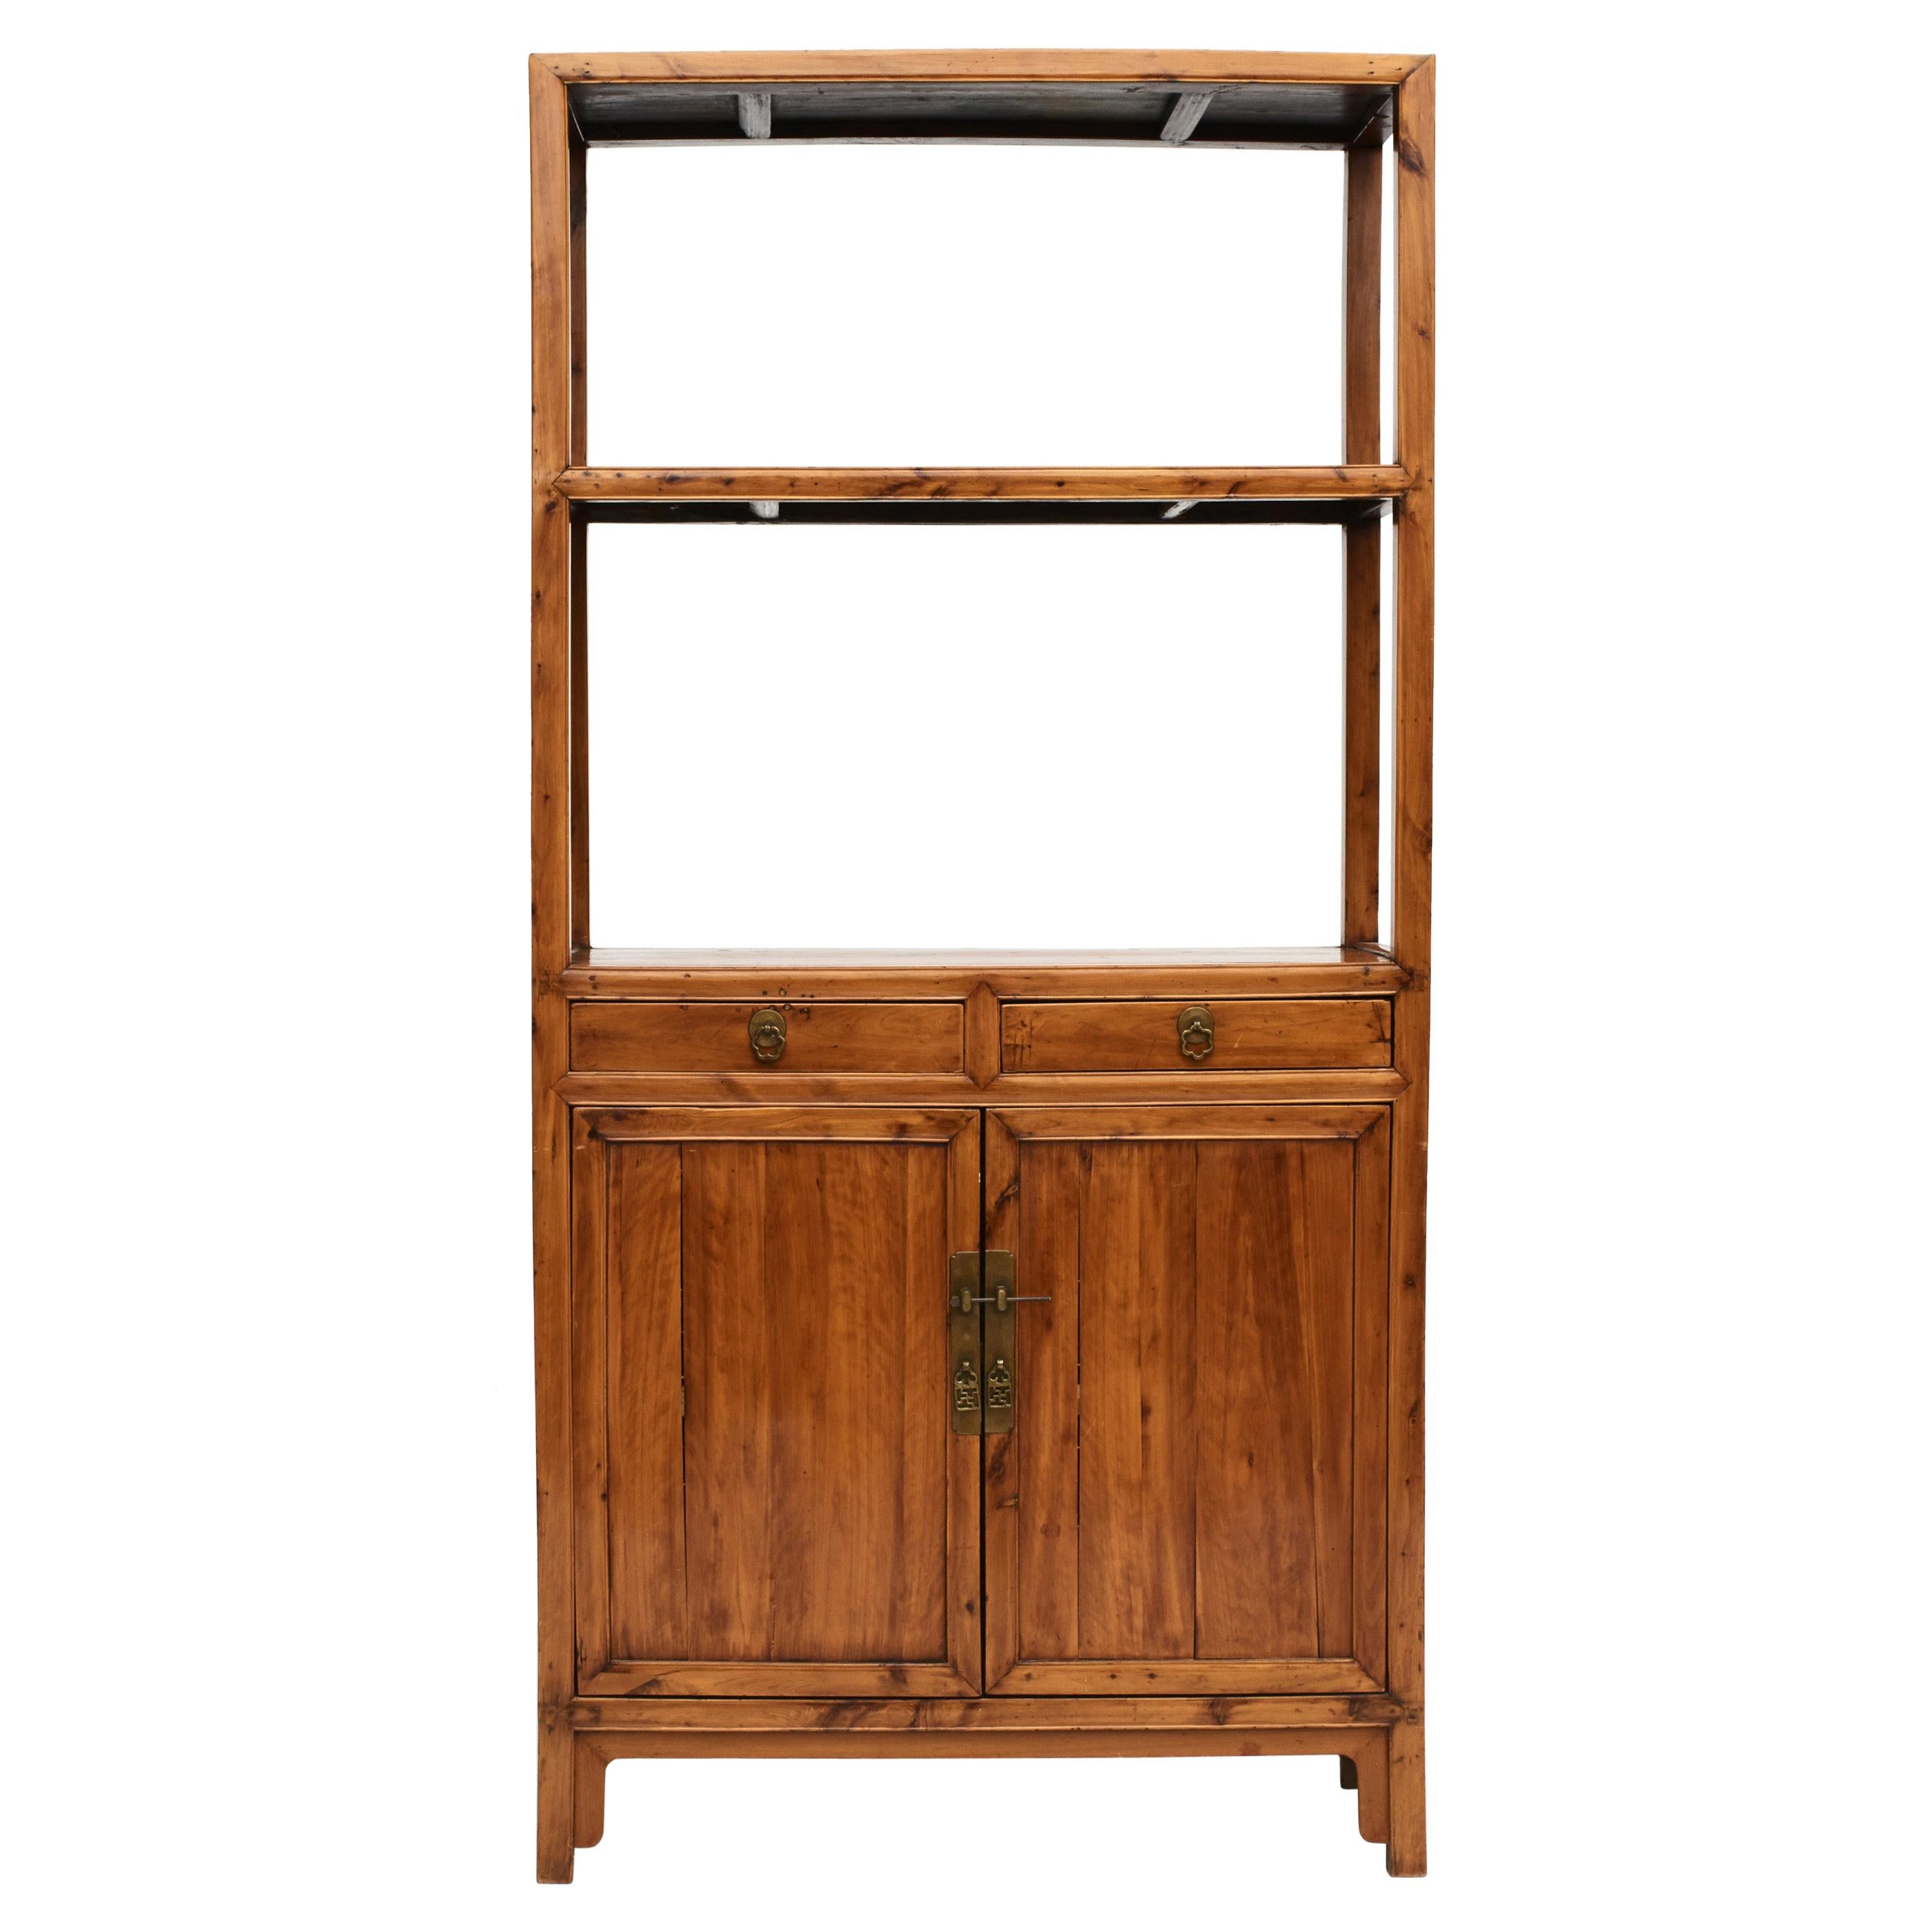 Peach Wood Bookcase From Jiangsu Province, 1840-1860